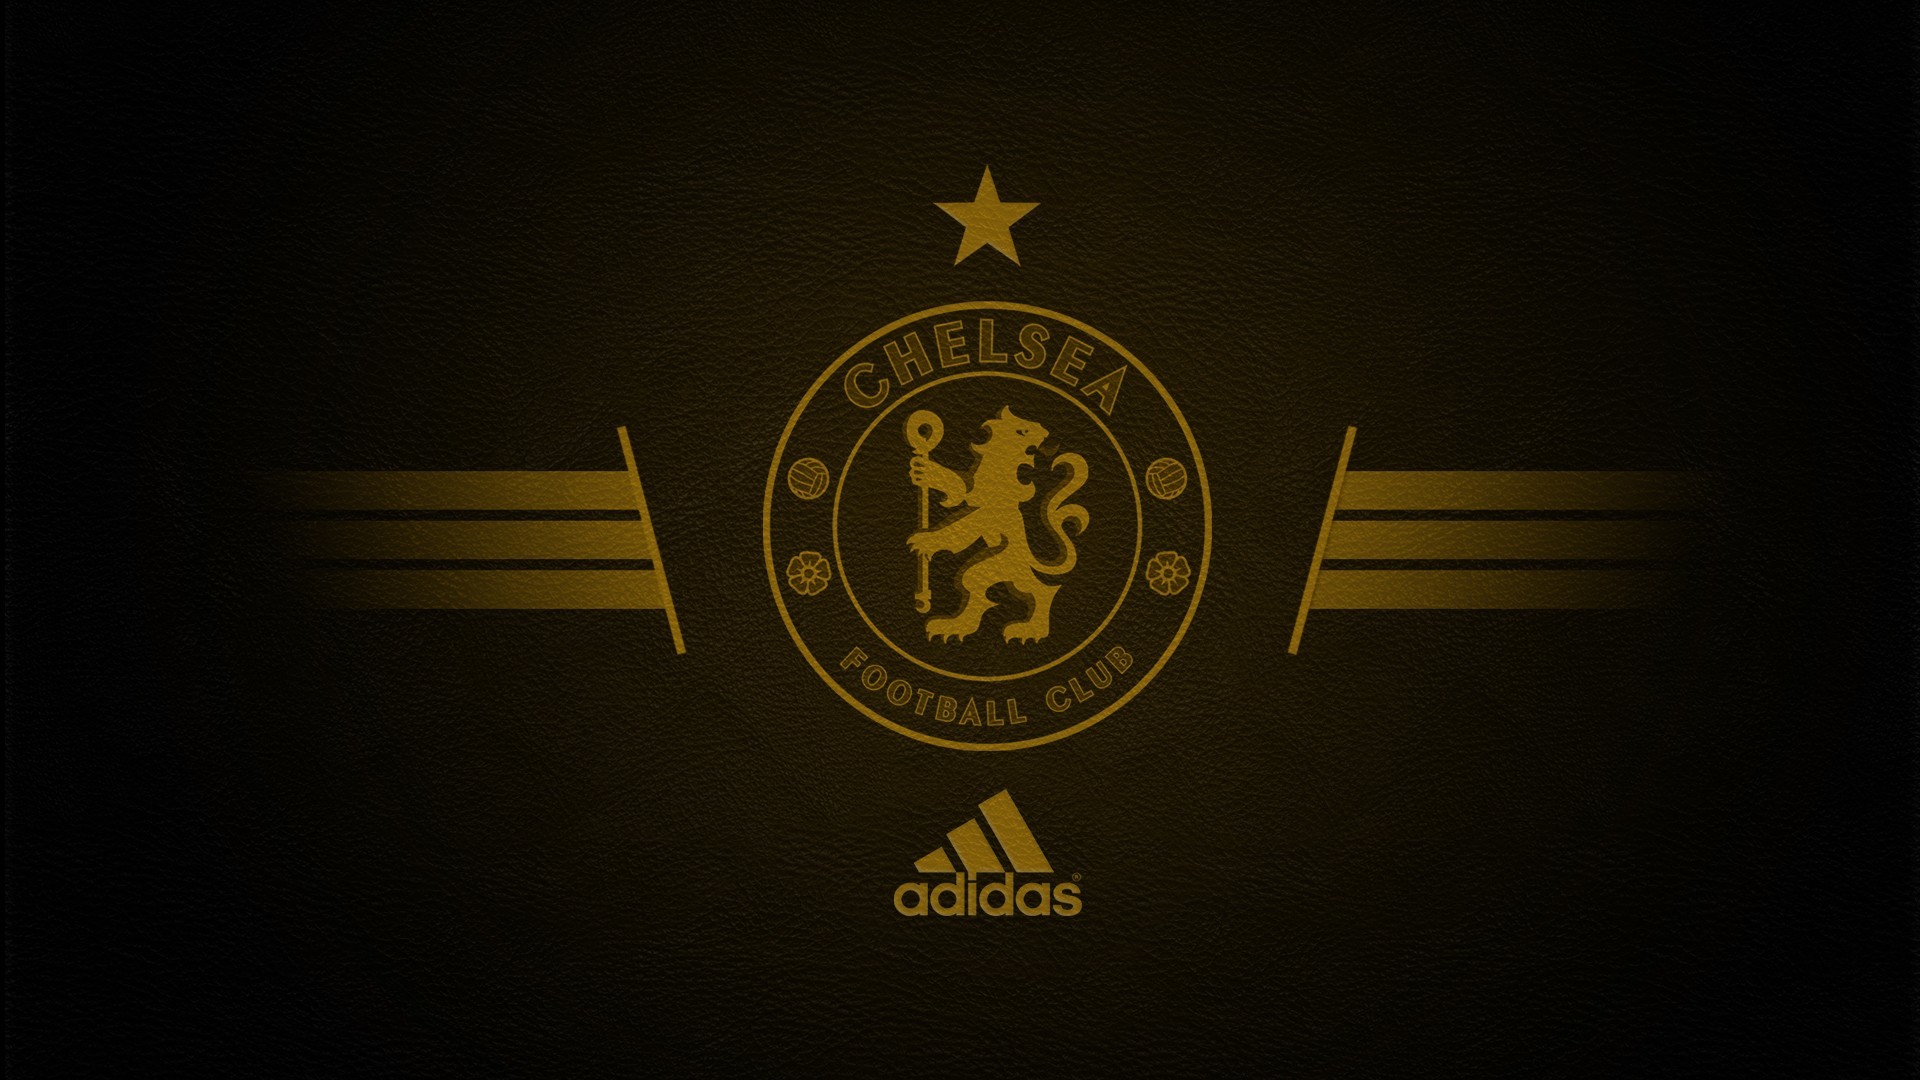 1920x1080 Chelsea Adidas Soccer Football Club Background.